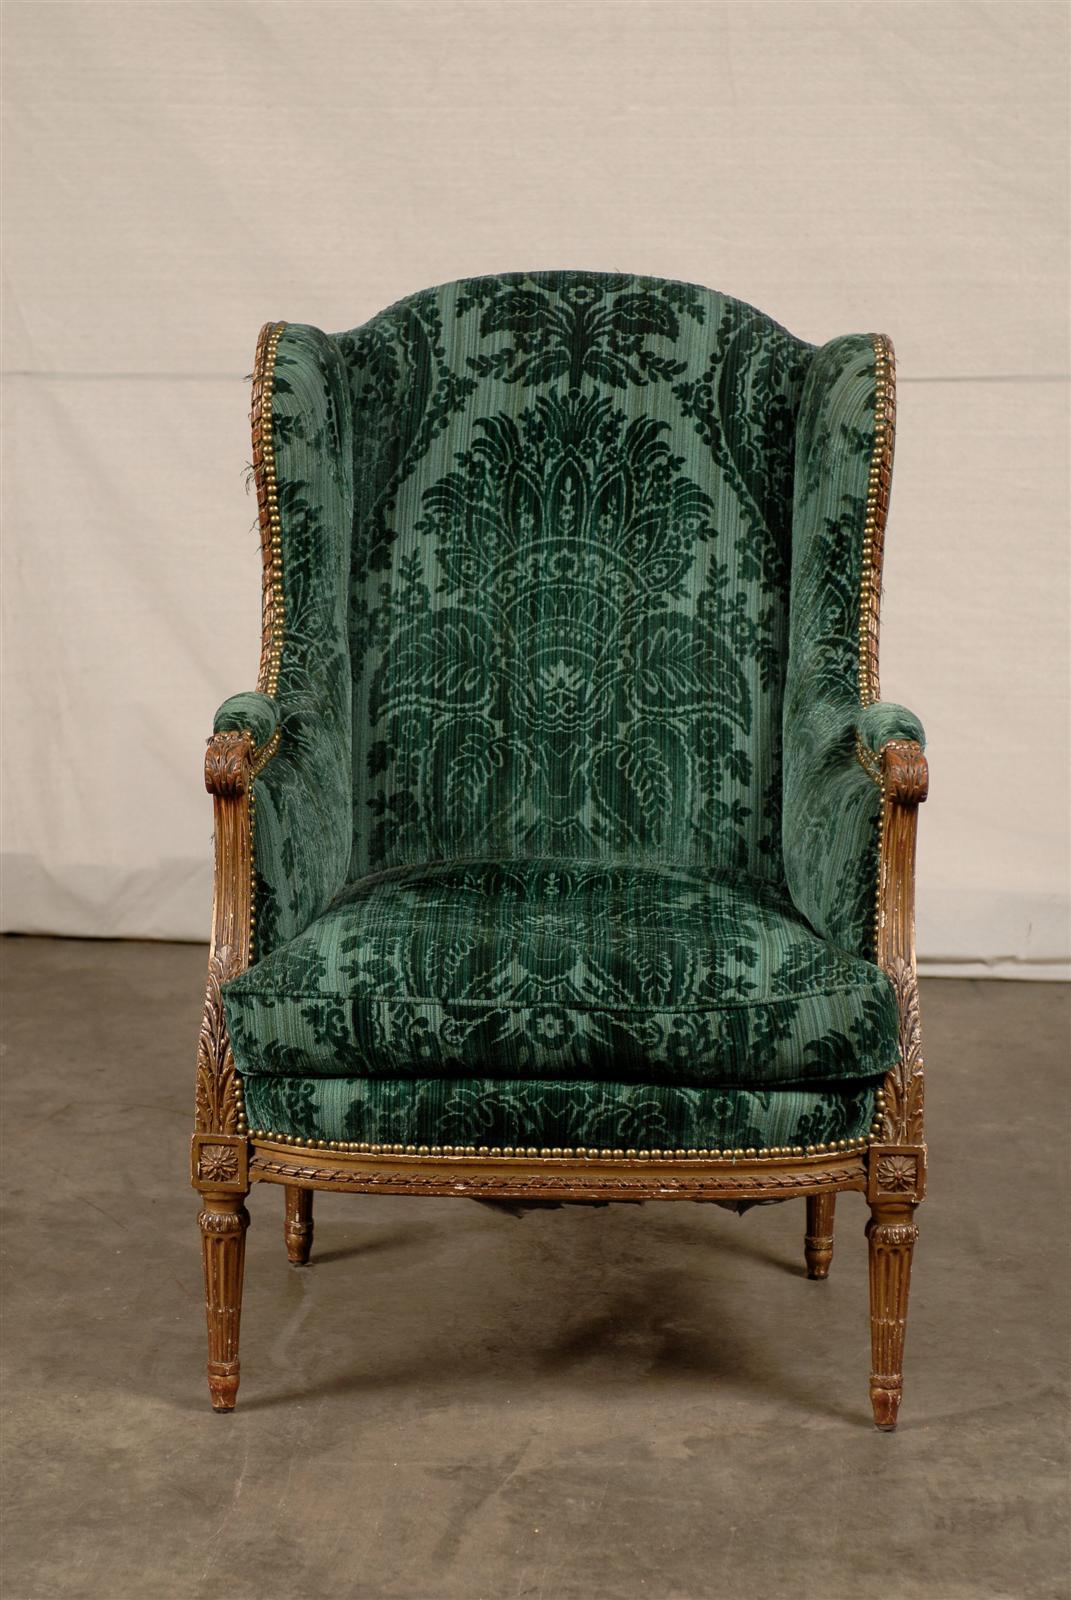 20th century Louis XVI giltwood wingback chair
Measures: 28